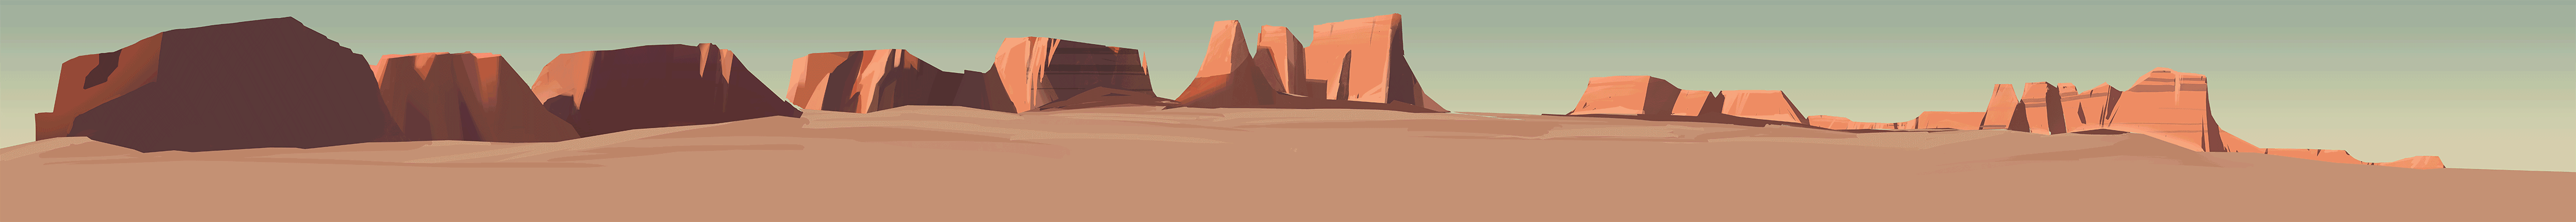 Evolution of the desert panorama